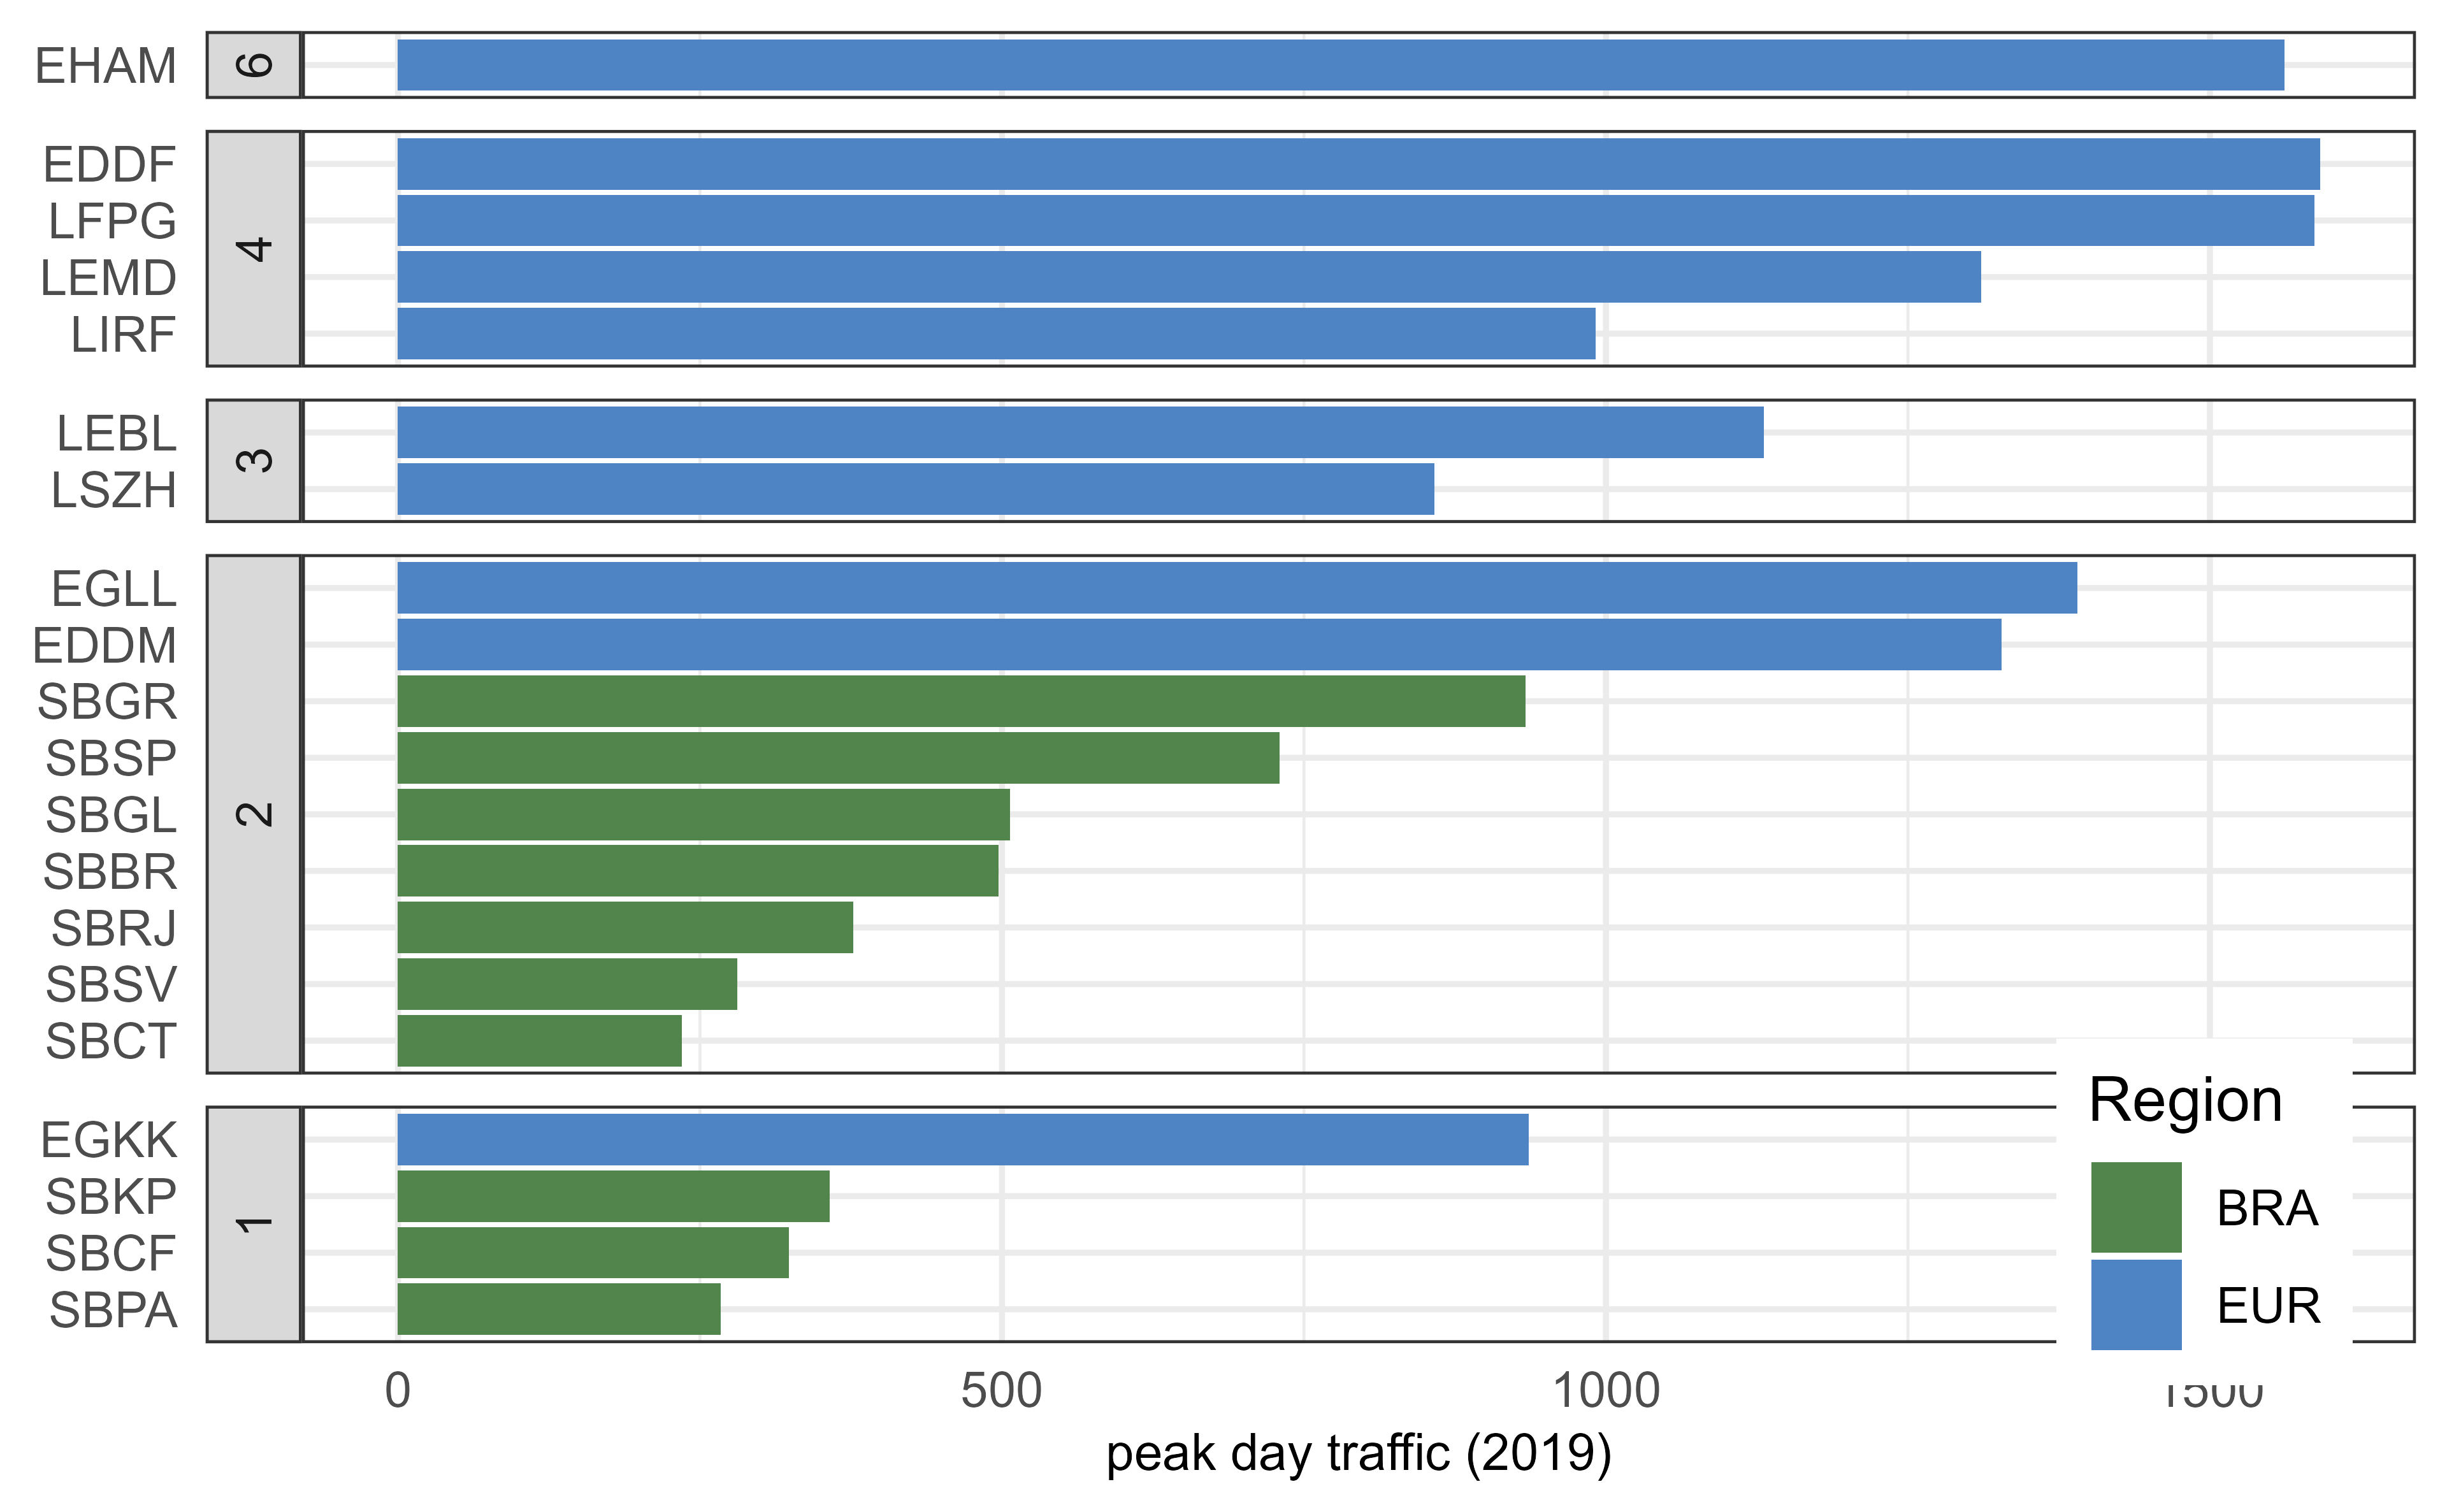 Peak day traffic (99th percentile of annual movements)